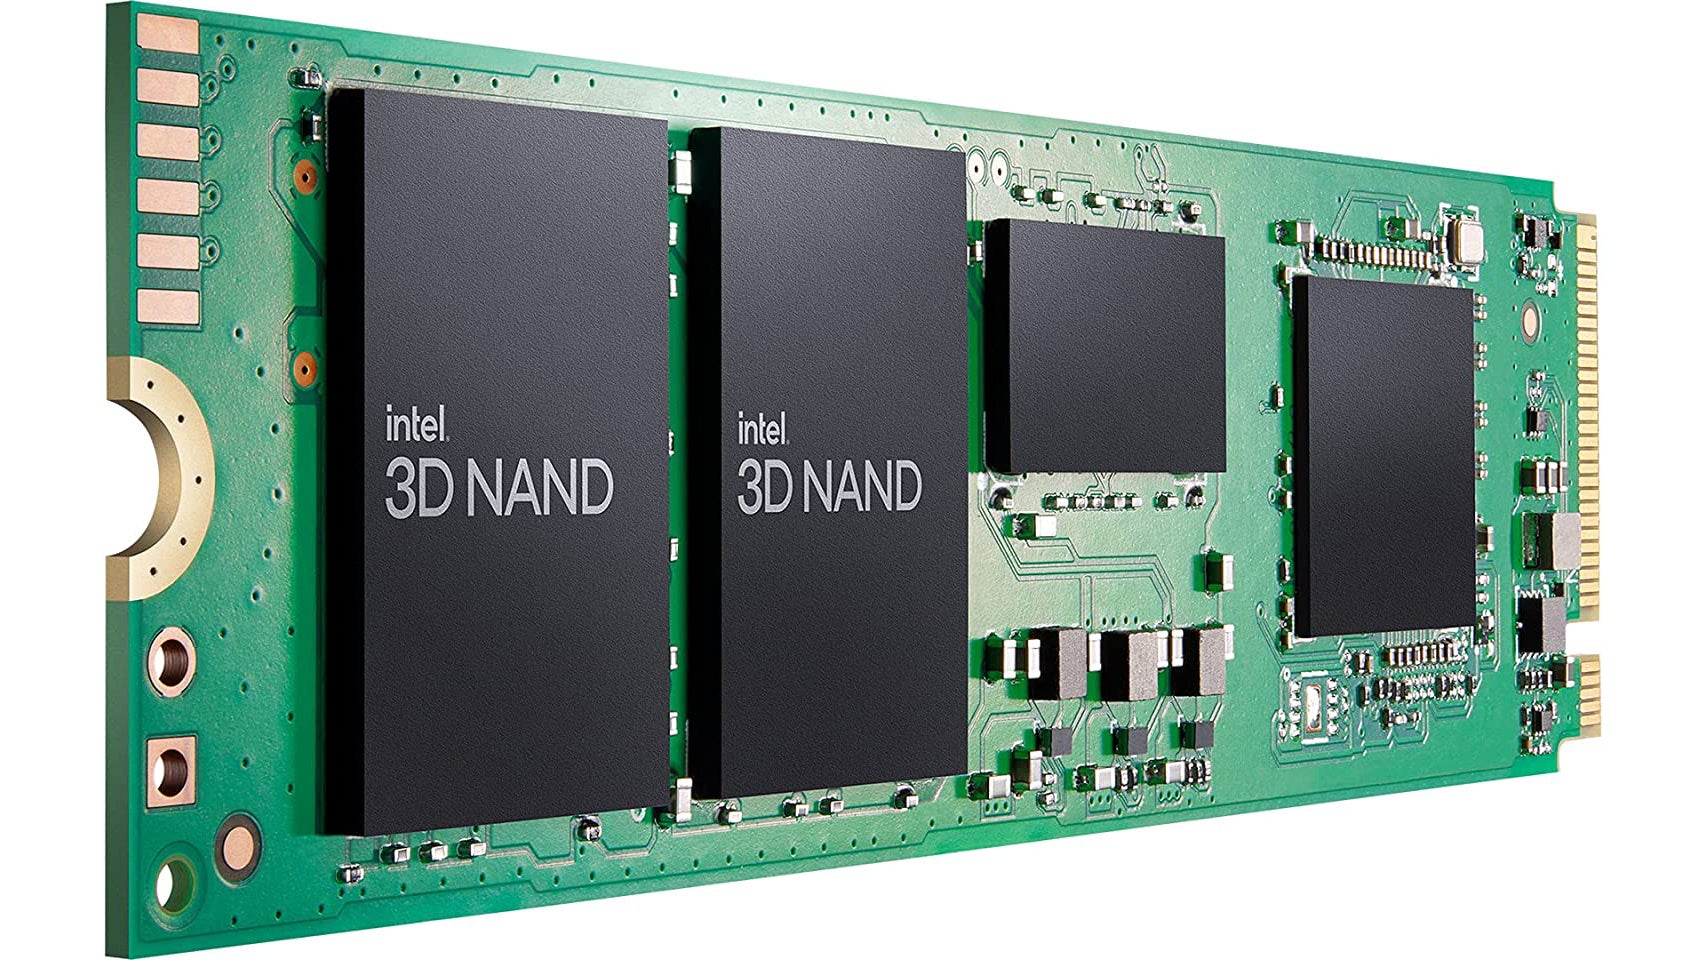 Compre este SSD NVMe de 1 TB por £ 58,84